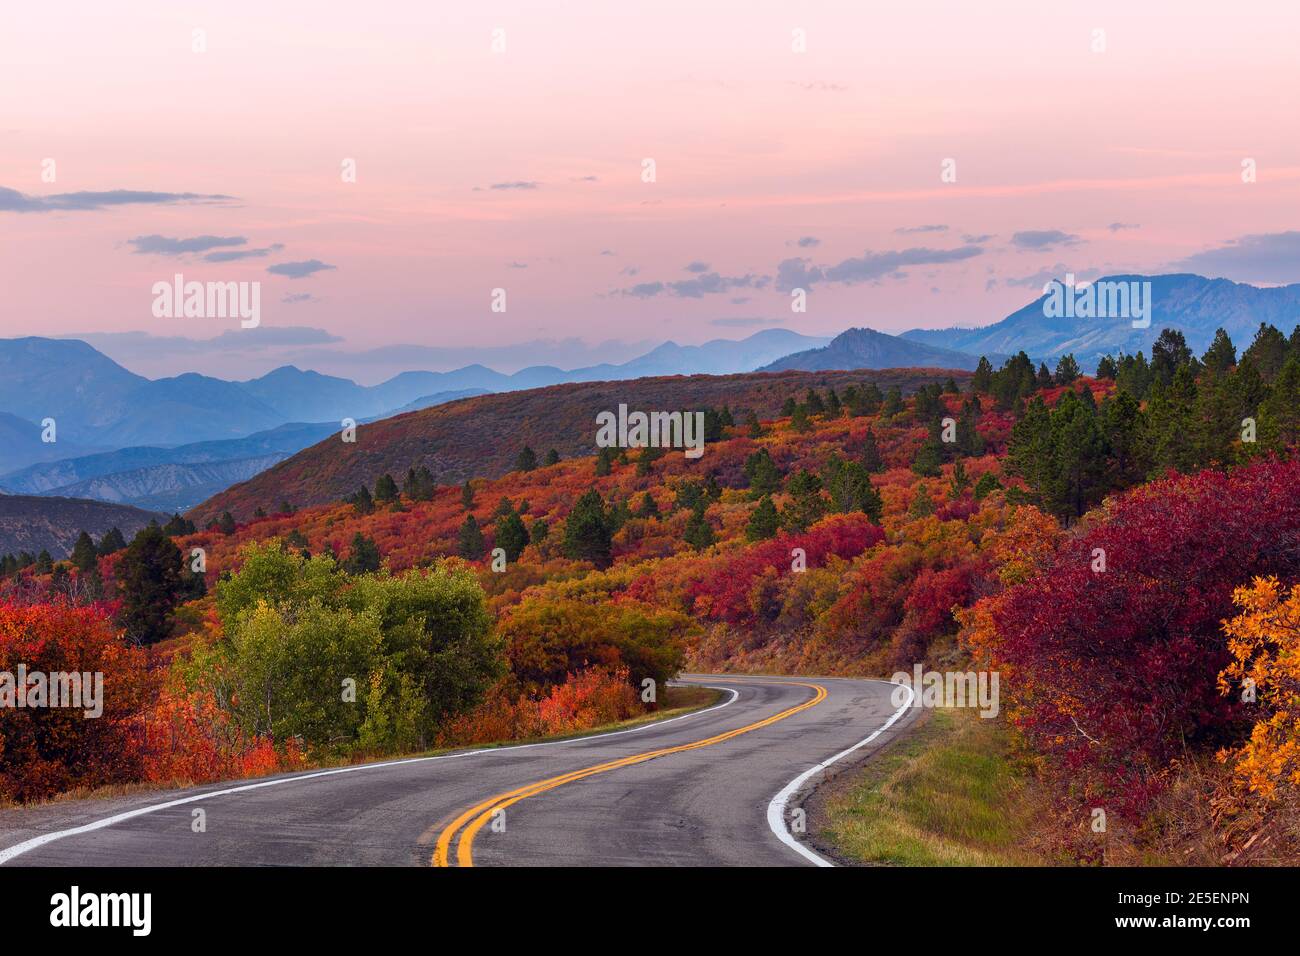 Winding mountain road through a scenic autumn landscape in the West Elk Mountains near Gunnison, Colorado, USA. Stock Photo